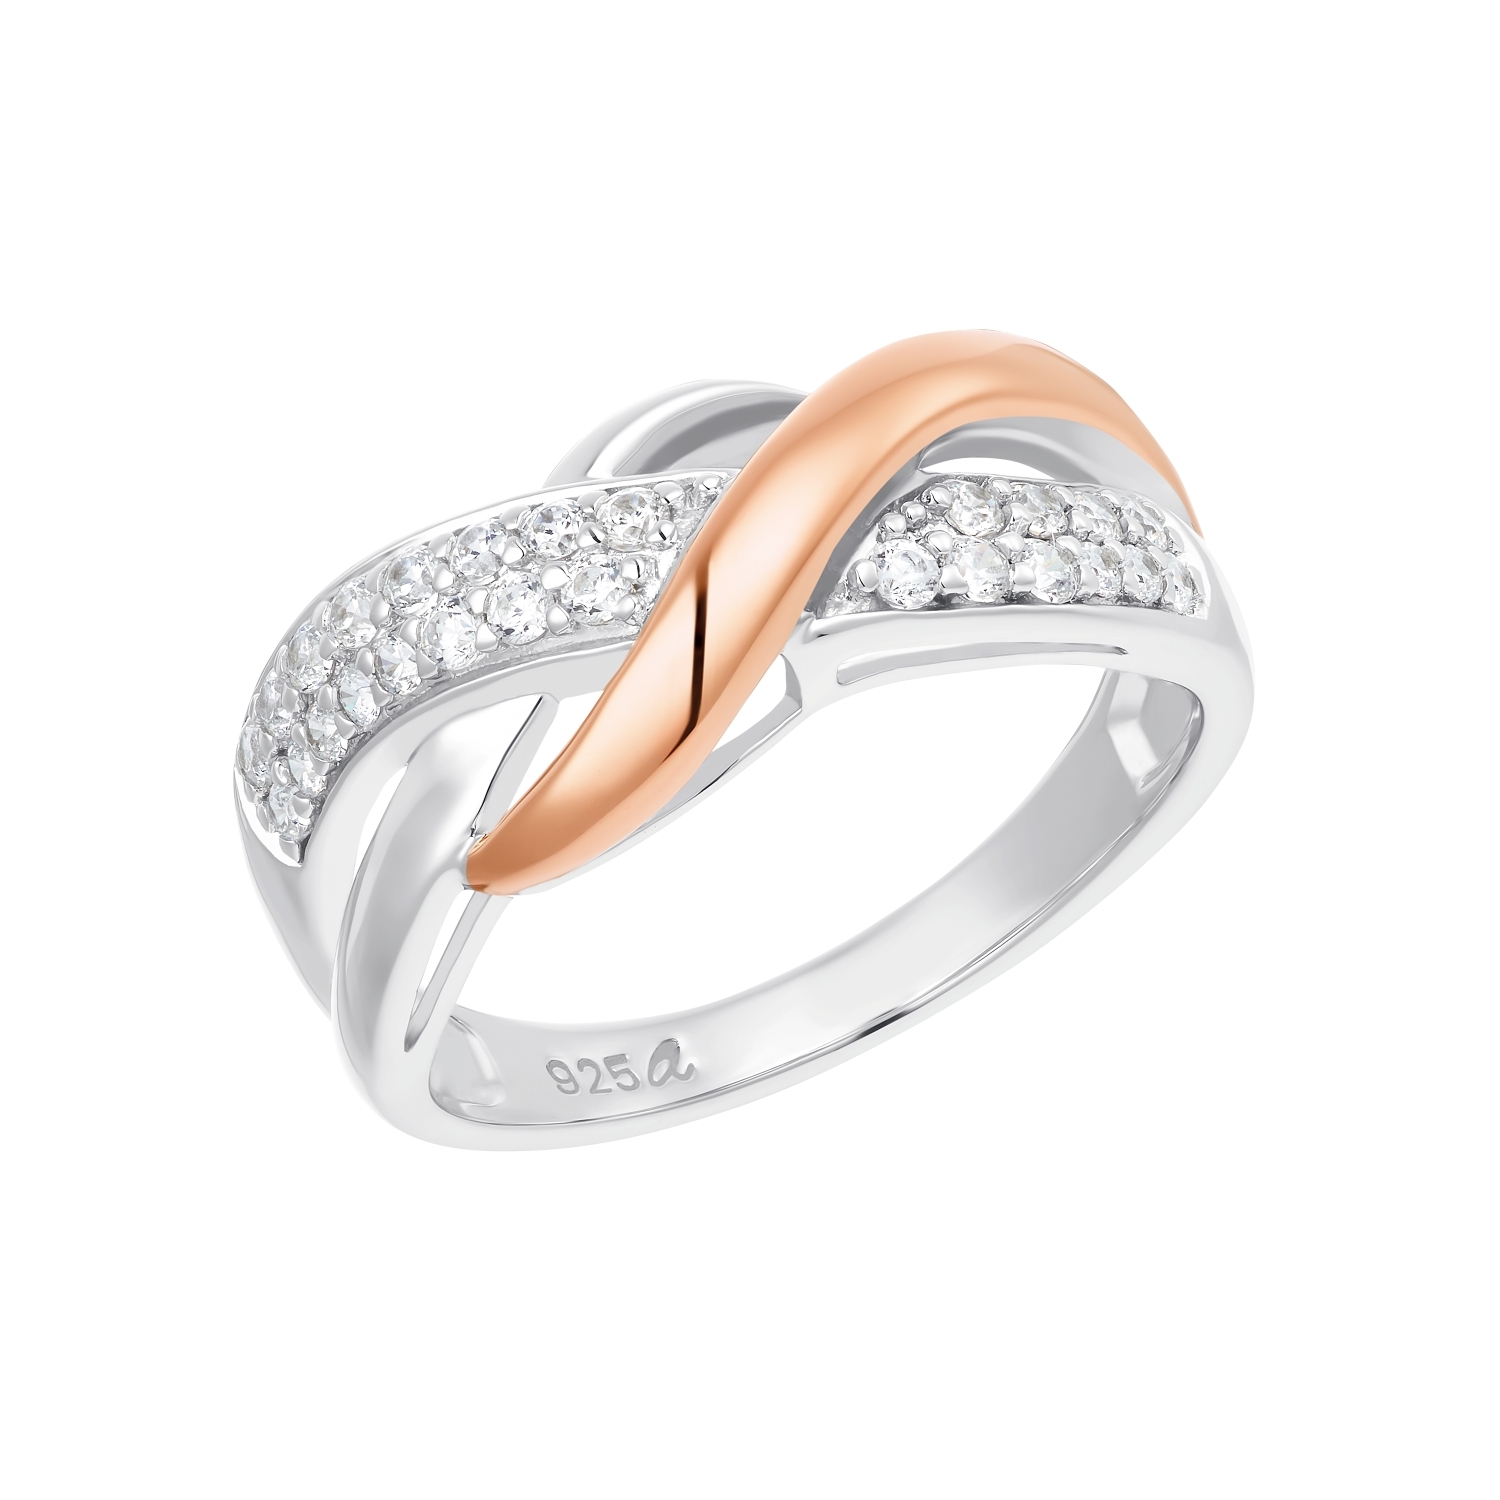 Ring für Damen, 925 Sterling Silber teil-rosévergoldet, Zirkonia (synth.)